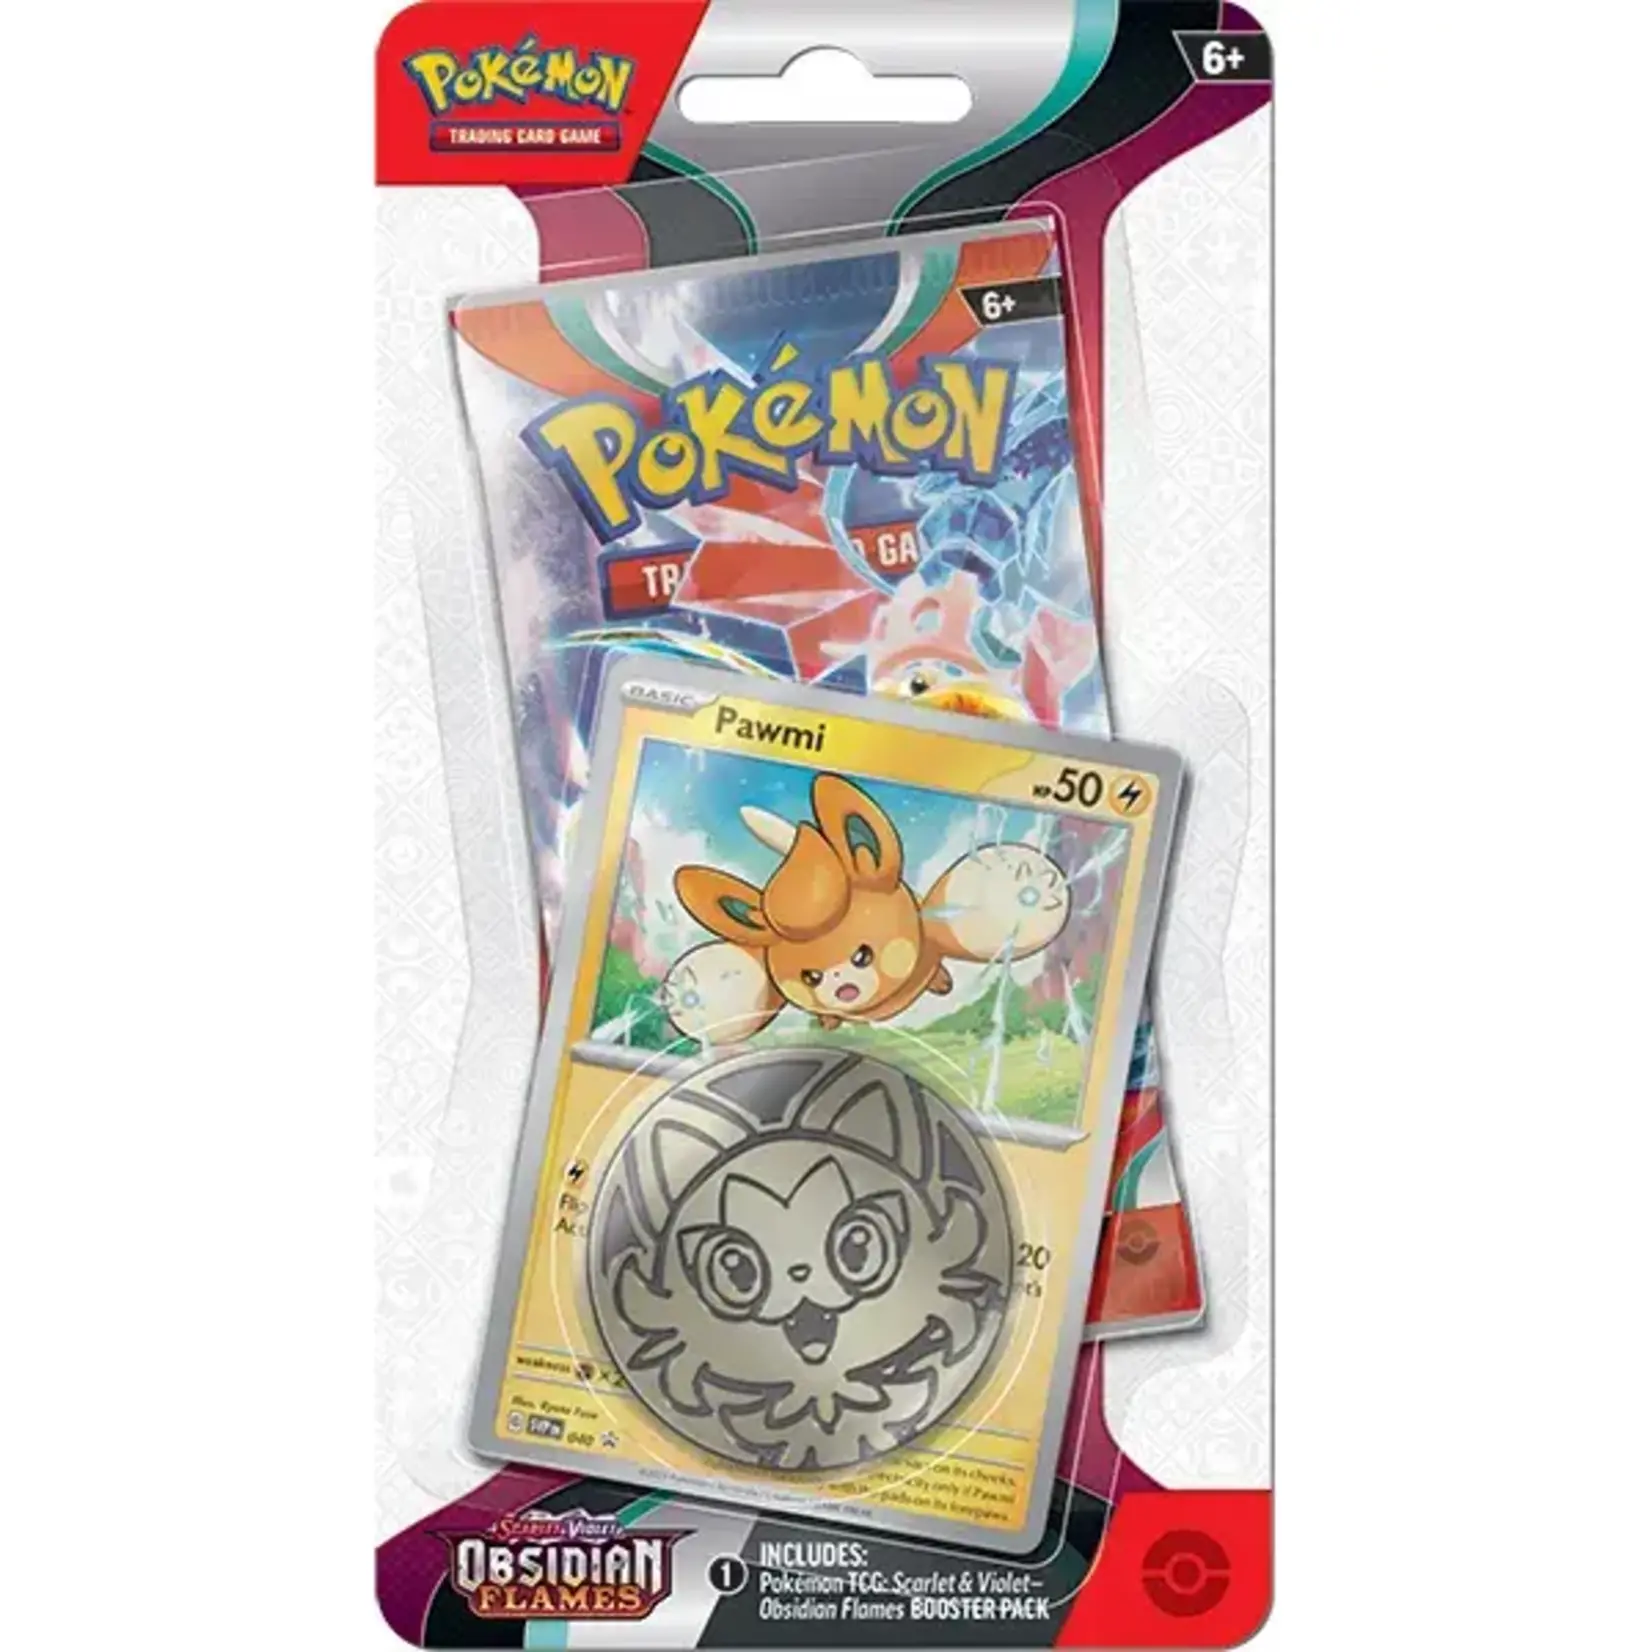 Pokémon Pokémon TCG: Scarlet & Violet 03 Obsidian Flames - Checklane Blister Pack - Pawmi